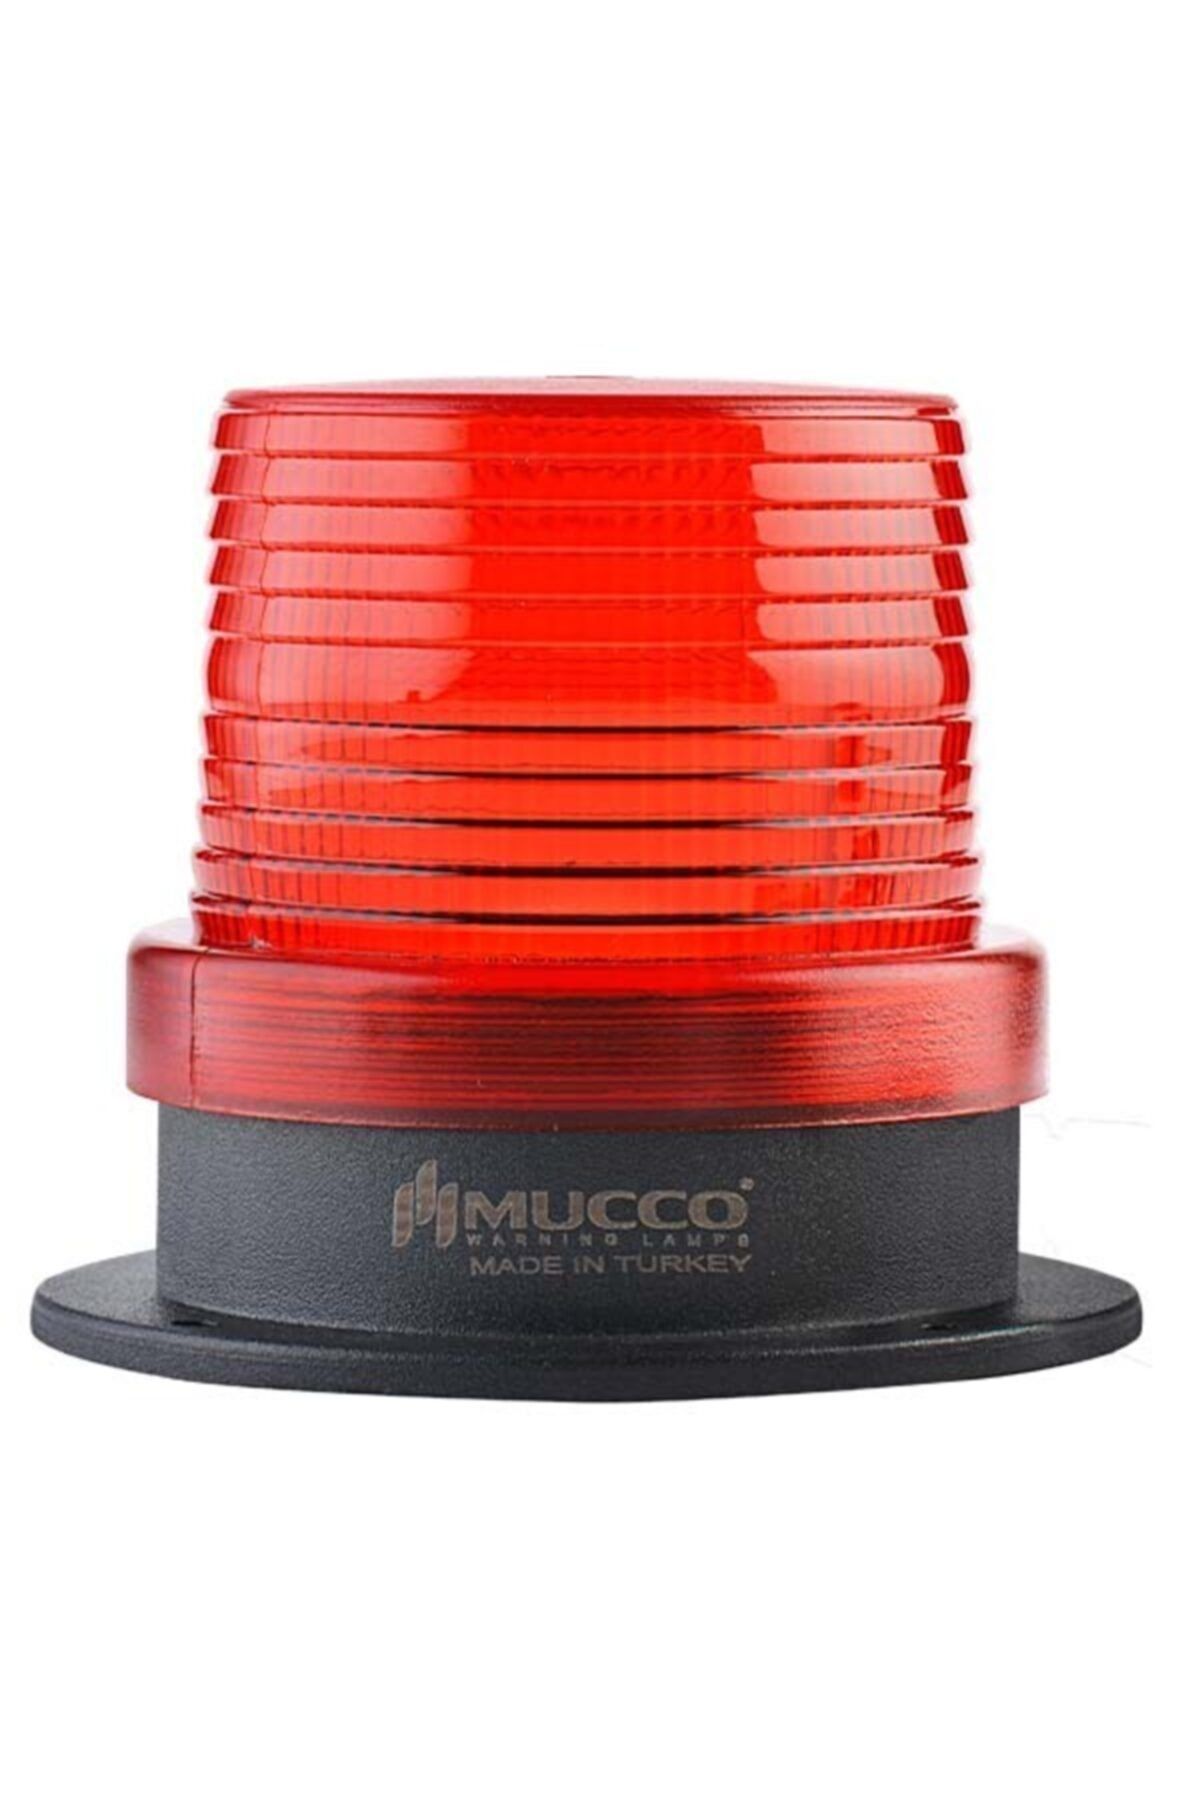 MUCCO 90 Çap 5 Işık Modu 10 Melodili Power Ledli Buzzerlı 85-250v Ac/dc Kırmızı Tepe Lambası